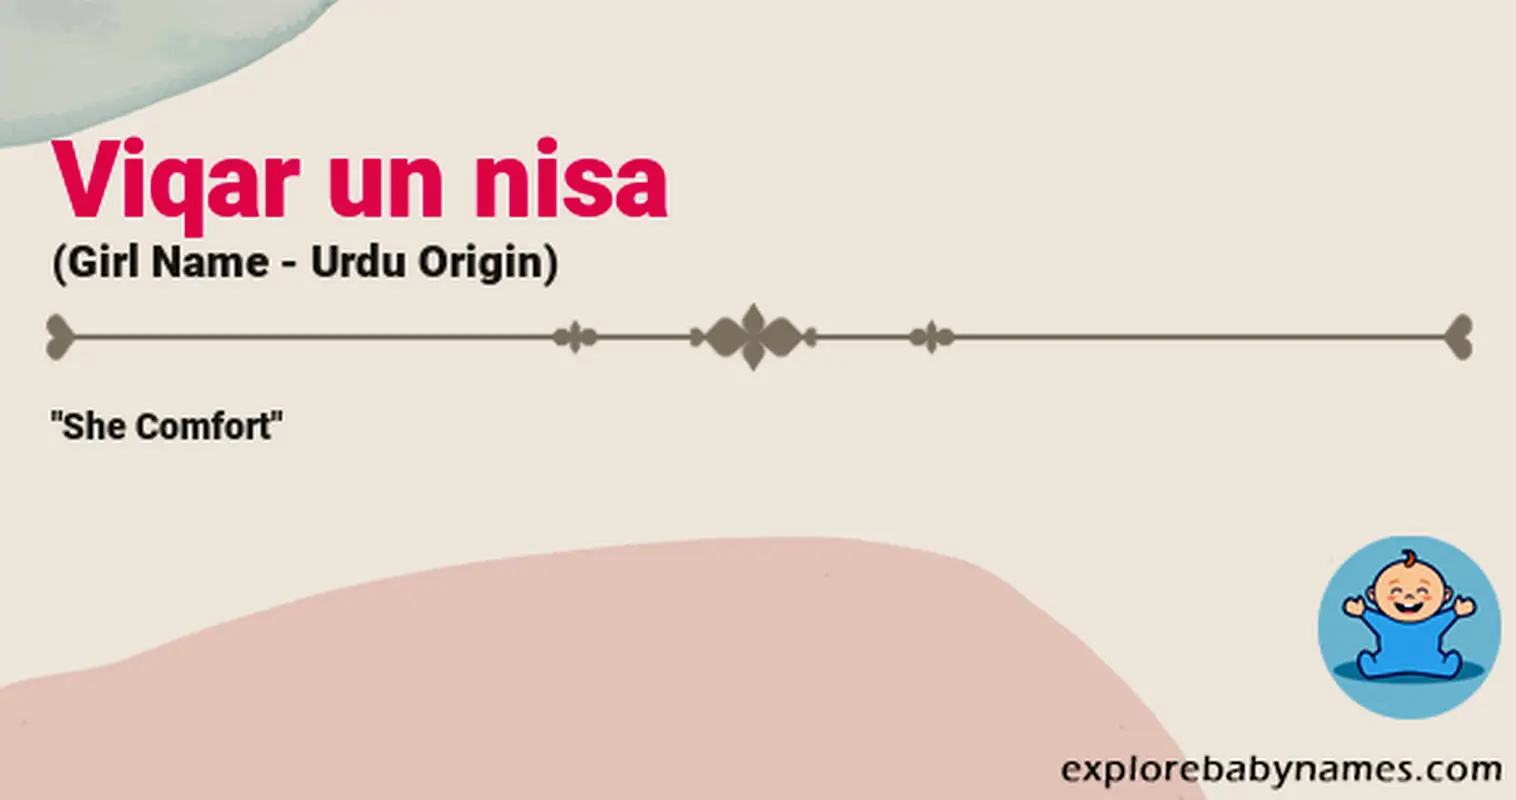 Meaning of Viqar un nisa